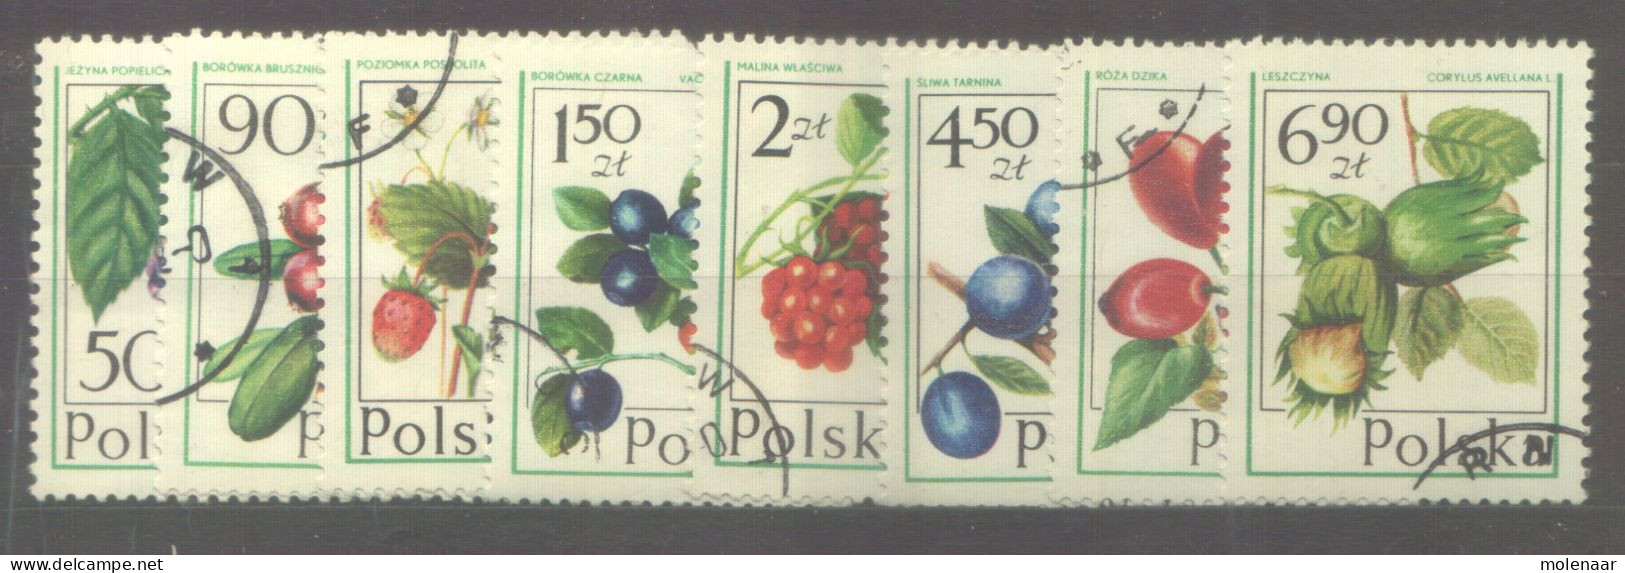 Postzegels > Europa > Polen > 1944-.... Republiek > 1971-80 > Gebruikt No. 2484-2491 (24140) - Gebraucht